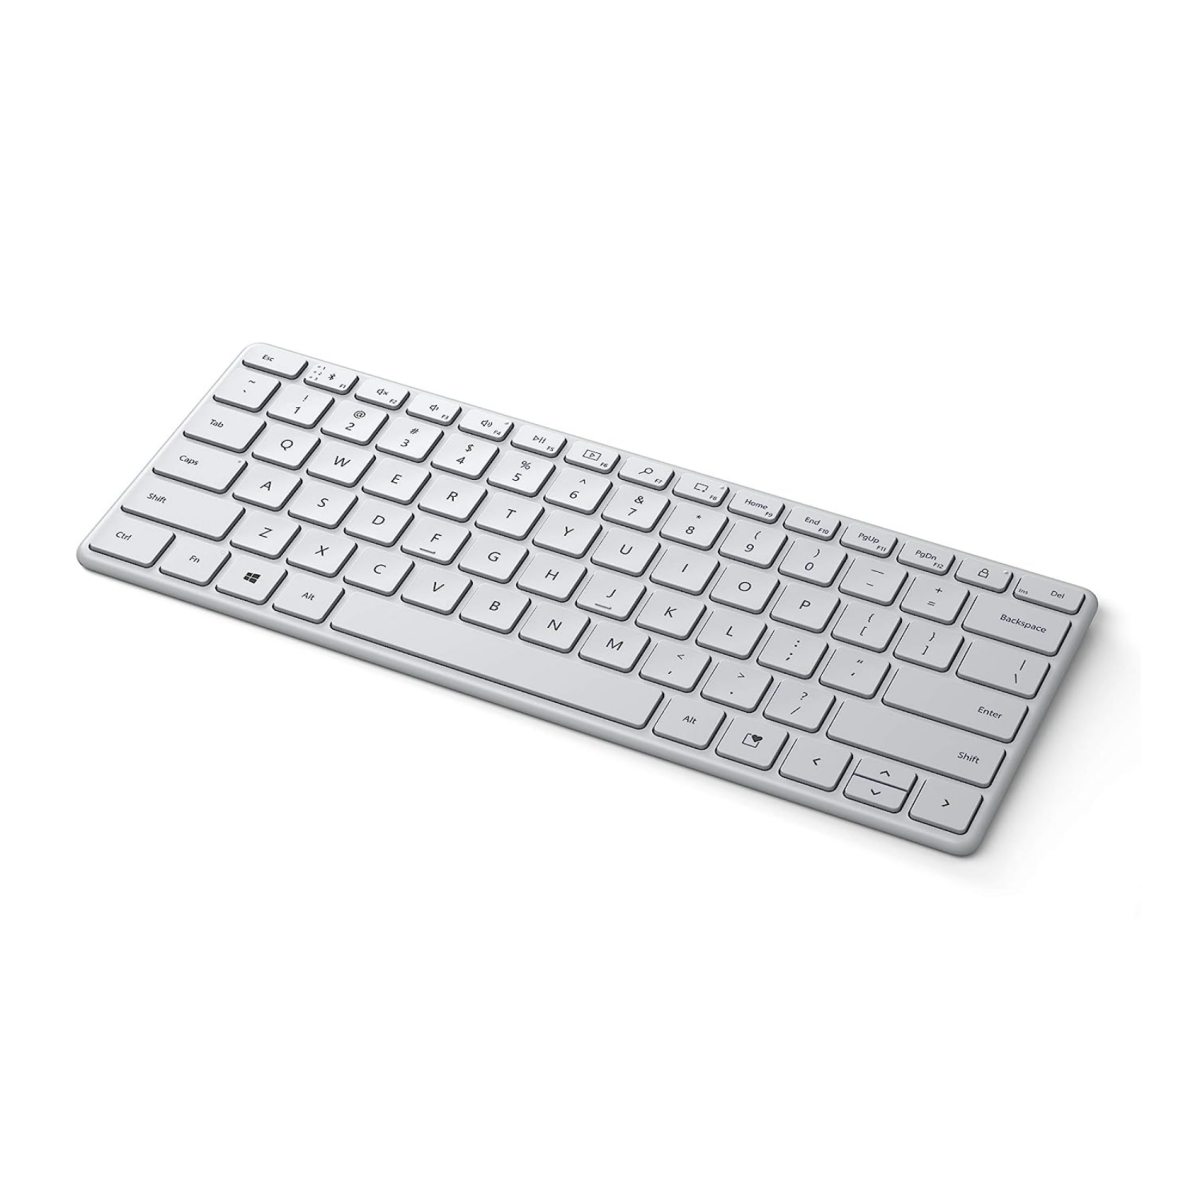 A Microsoft Designer Compact Keyboard